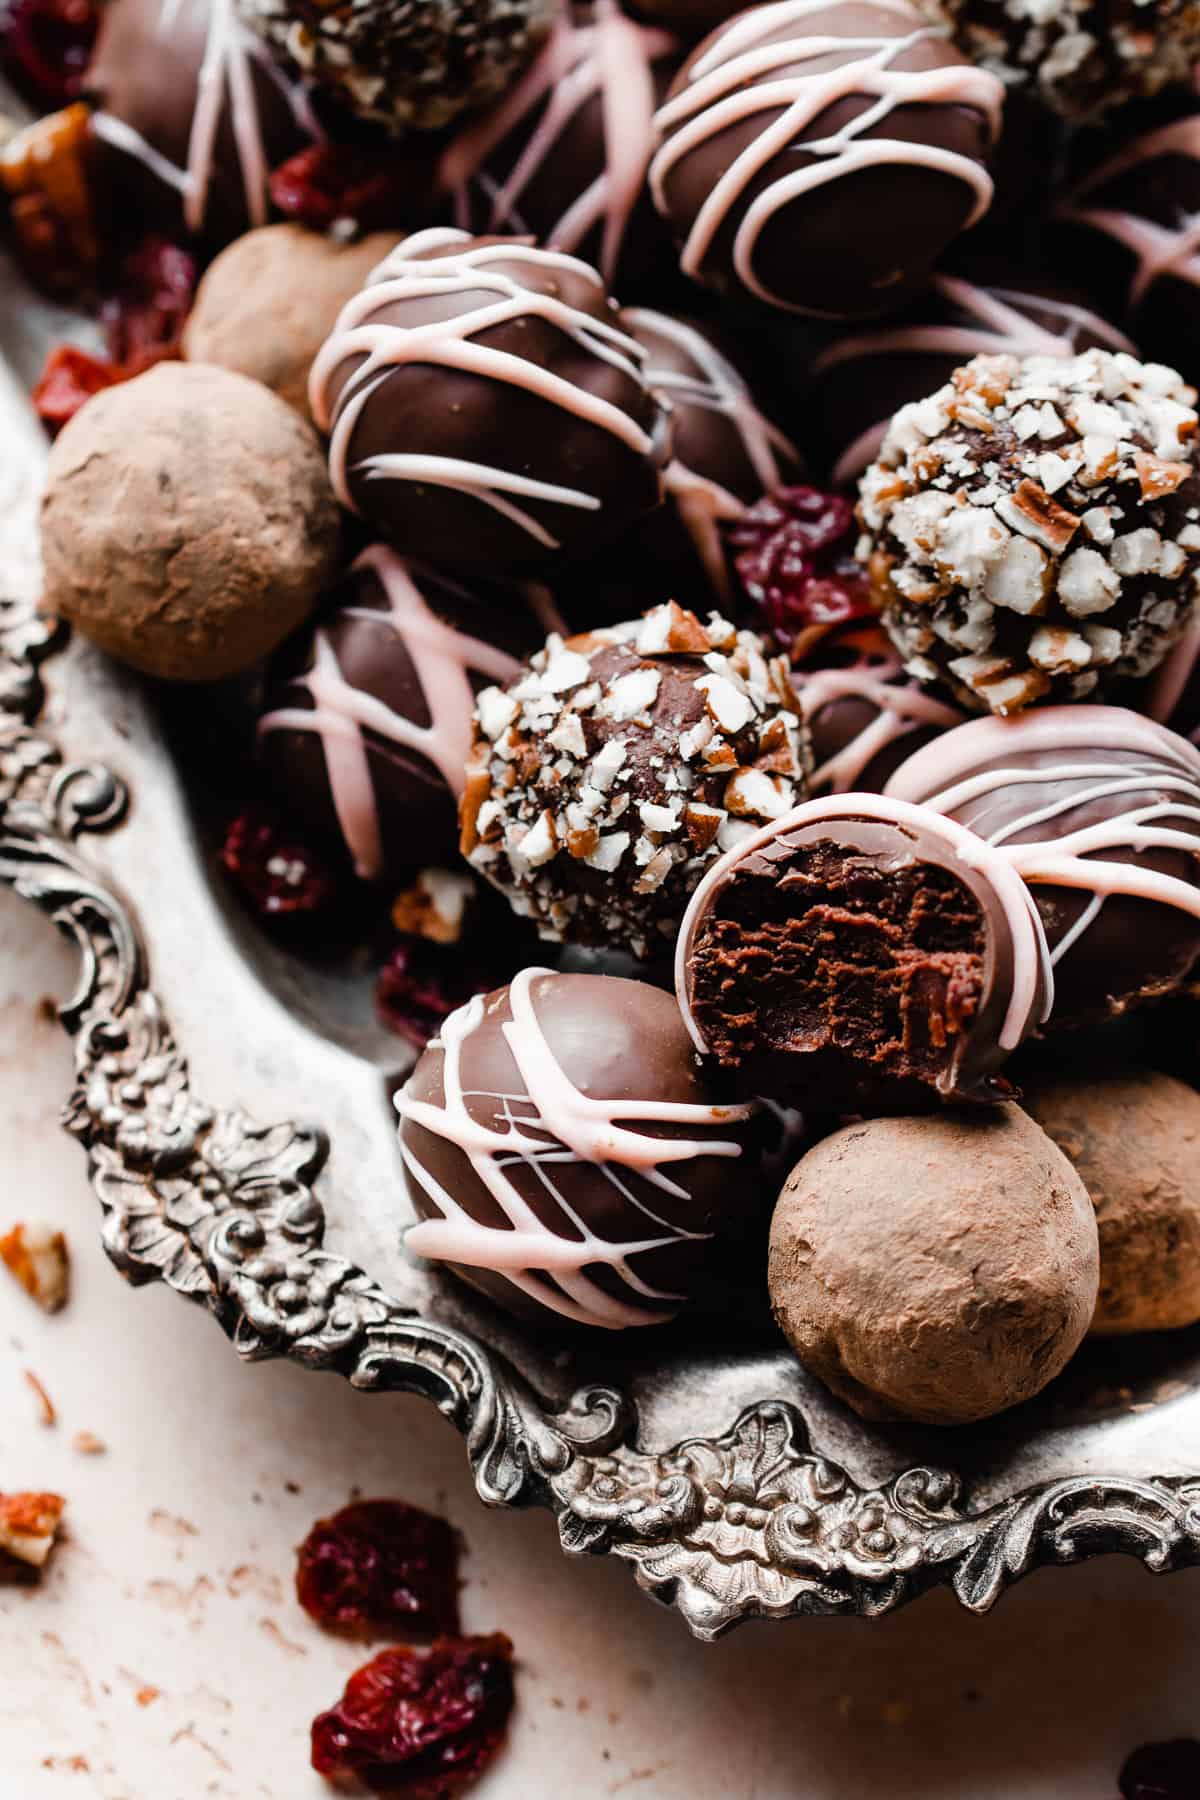 A tray full of chocolate truffles.